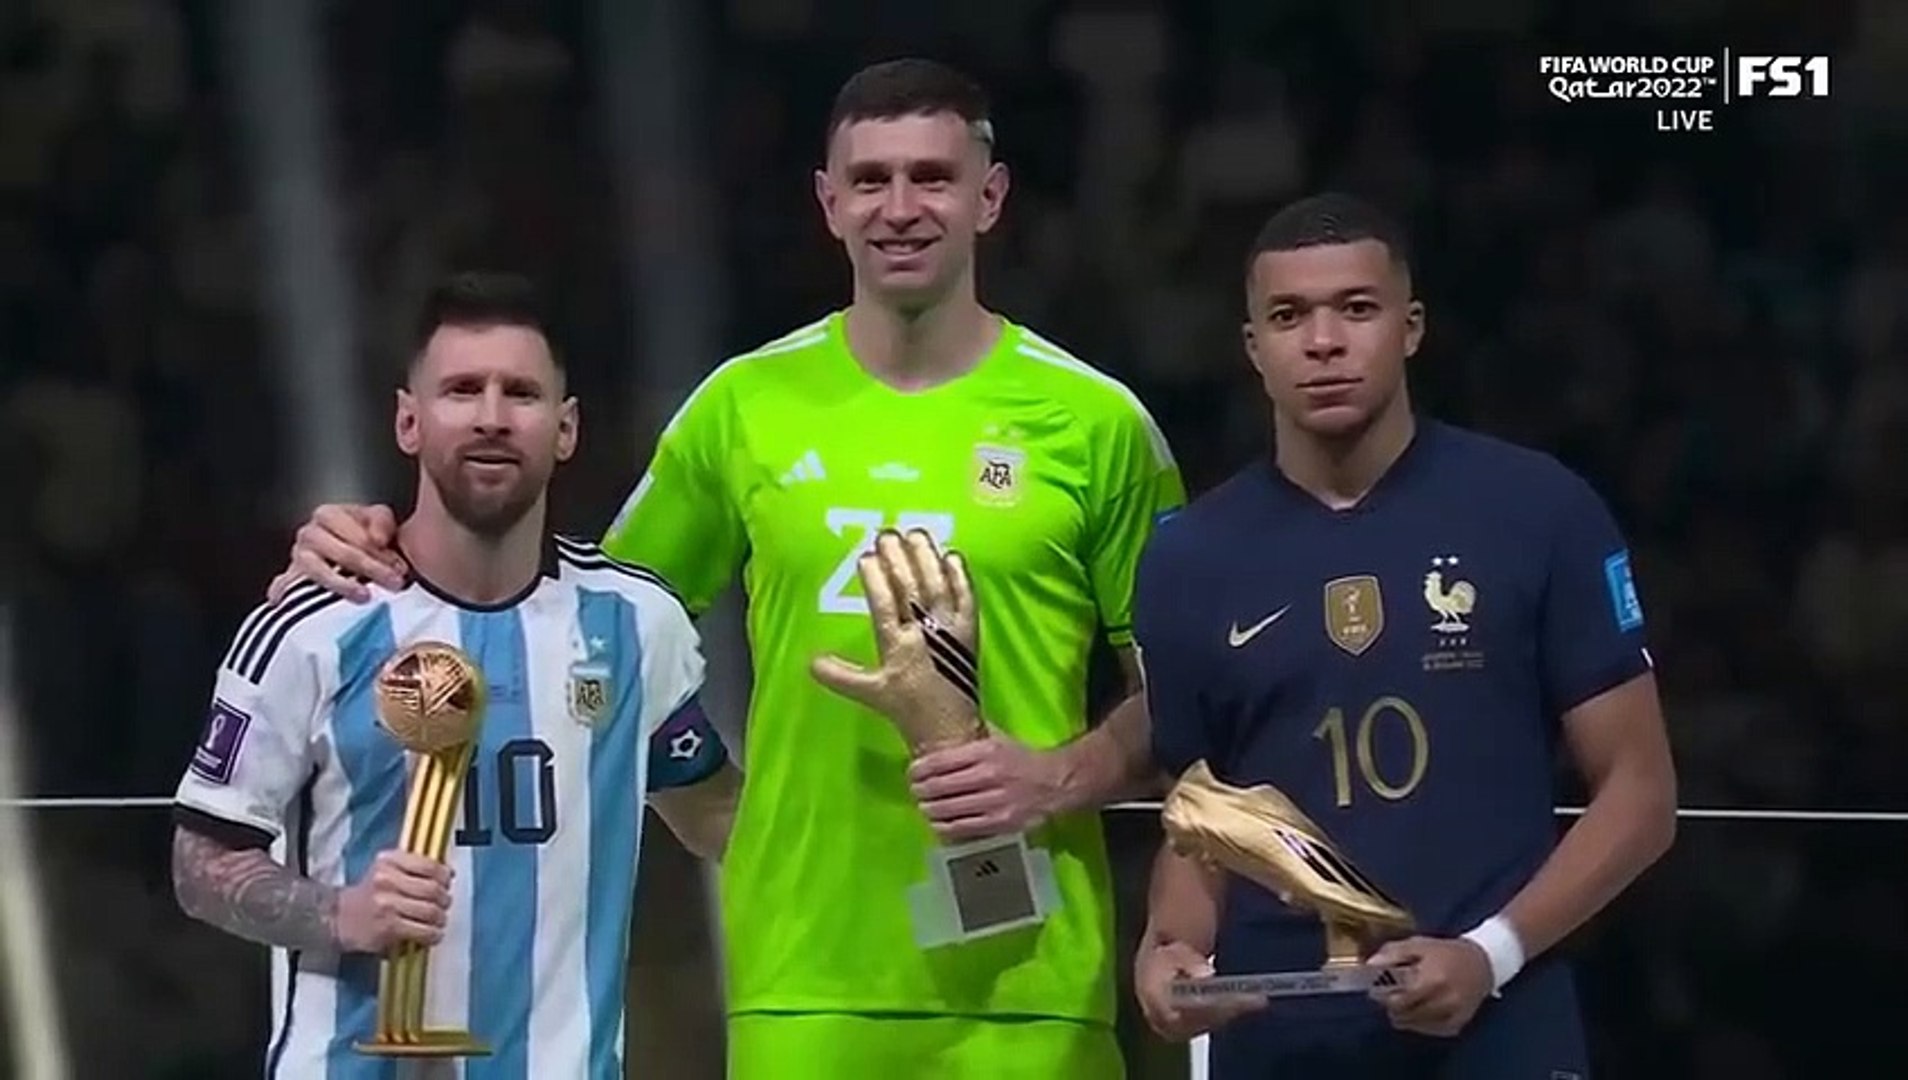 world cup award ceremony